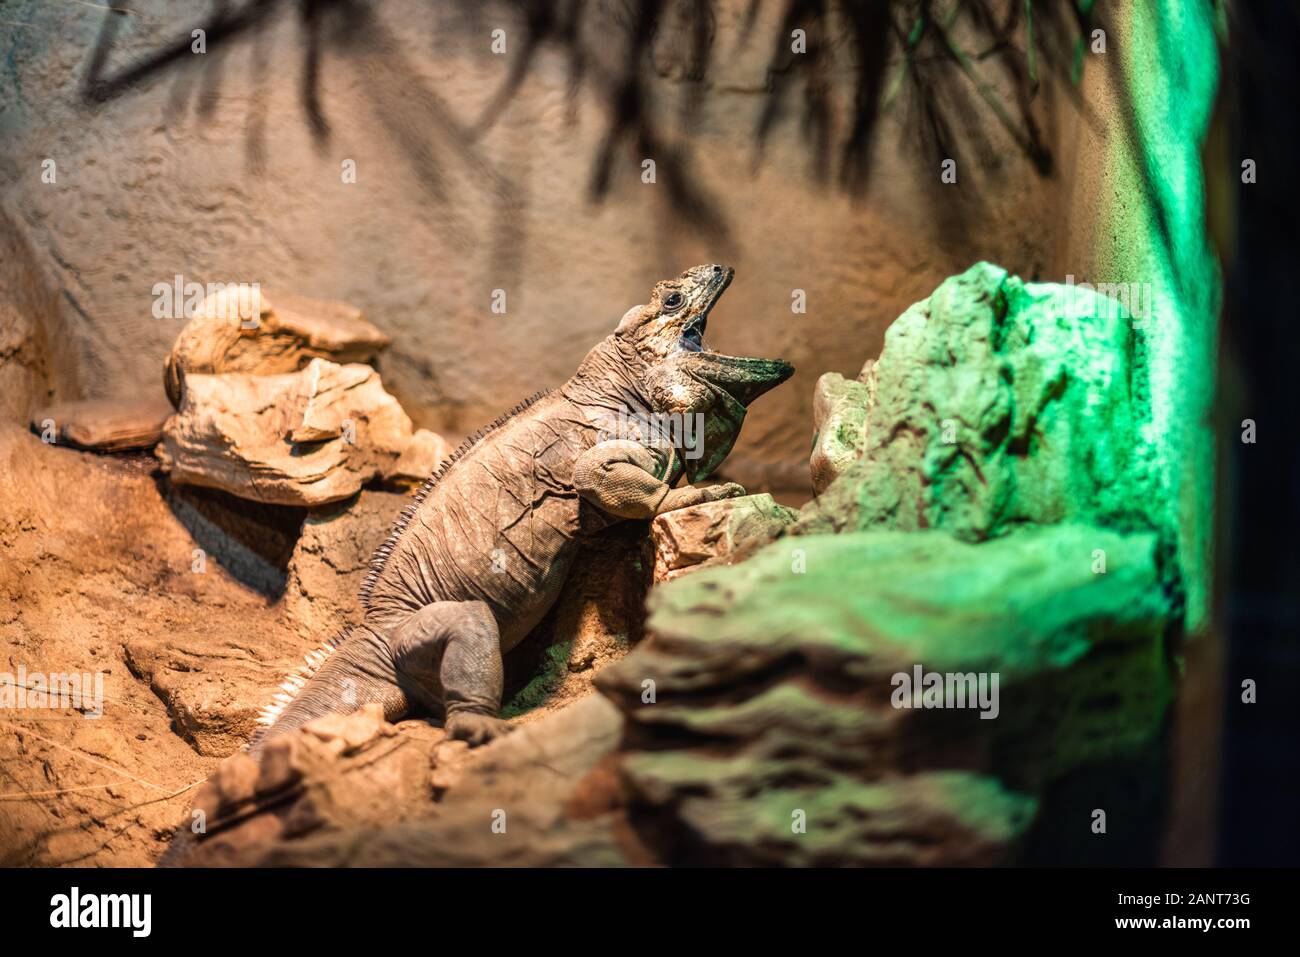 Iguana with open mouth on wooden log against stone background zoo germany munich wildlife animal Stock Photo